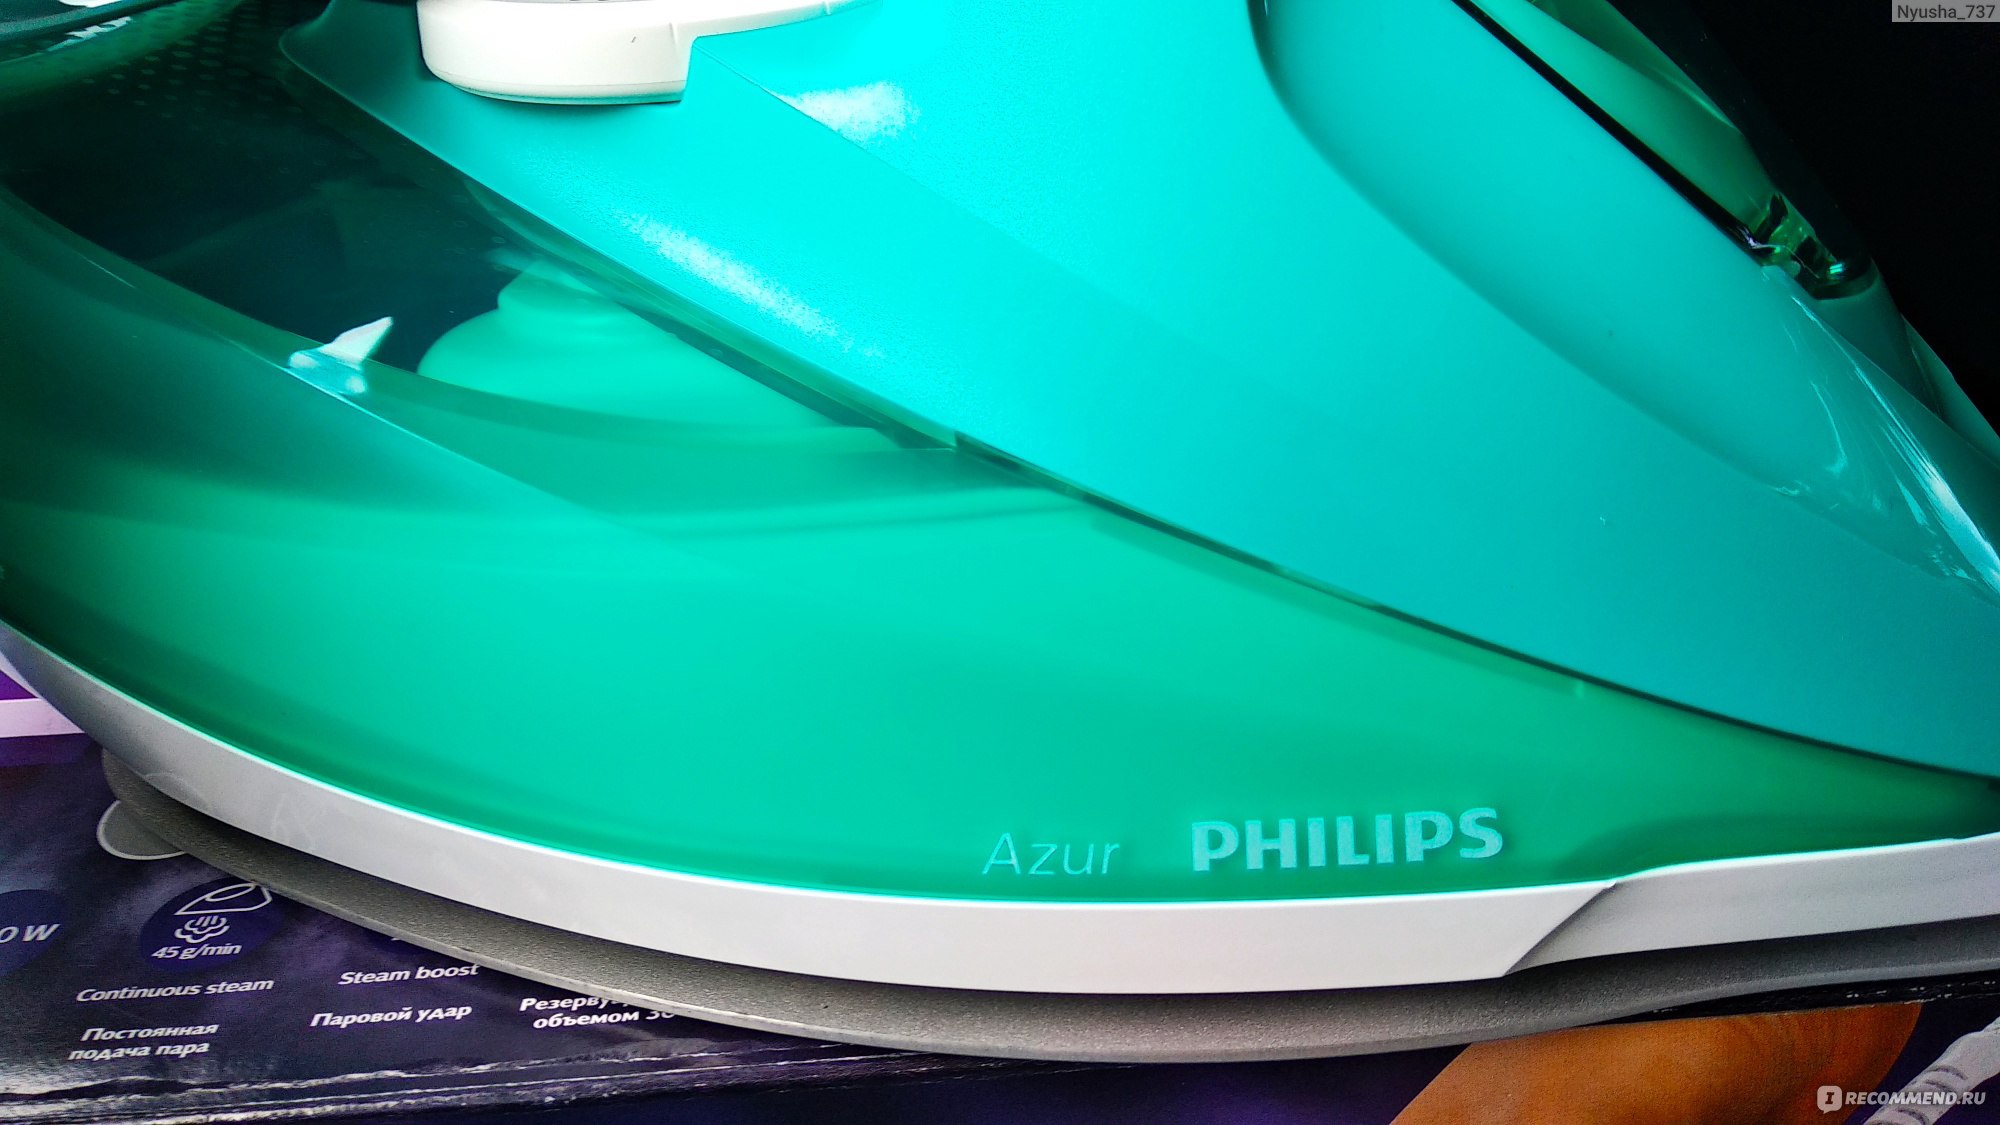 Azur gc5039. Утюг Philips gc4537/70. Philips gc4537/70 Azur. Утюг Philips GC 4537. Утюг Philips gc4537/70 Azur, белый/зеленый.